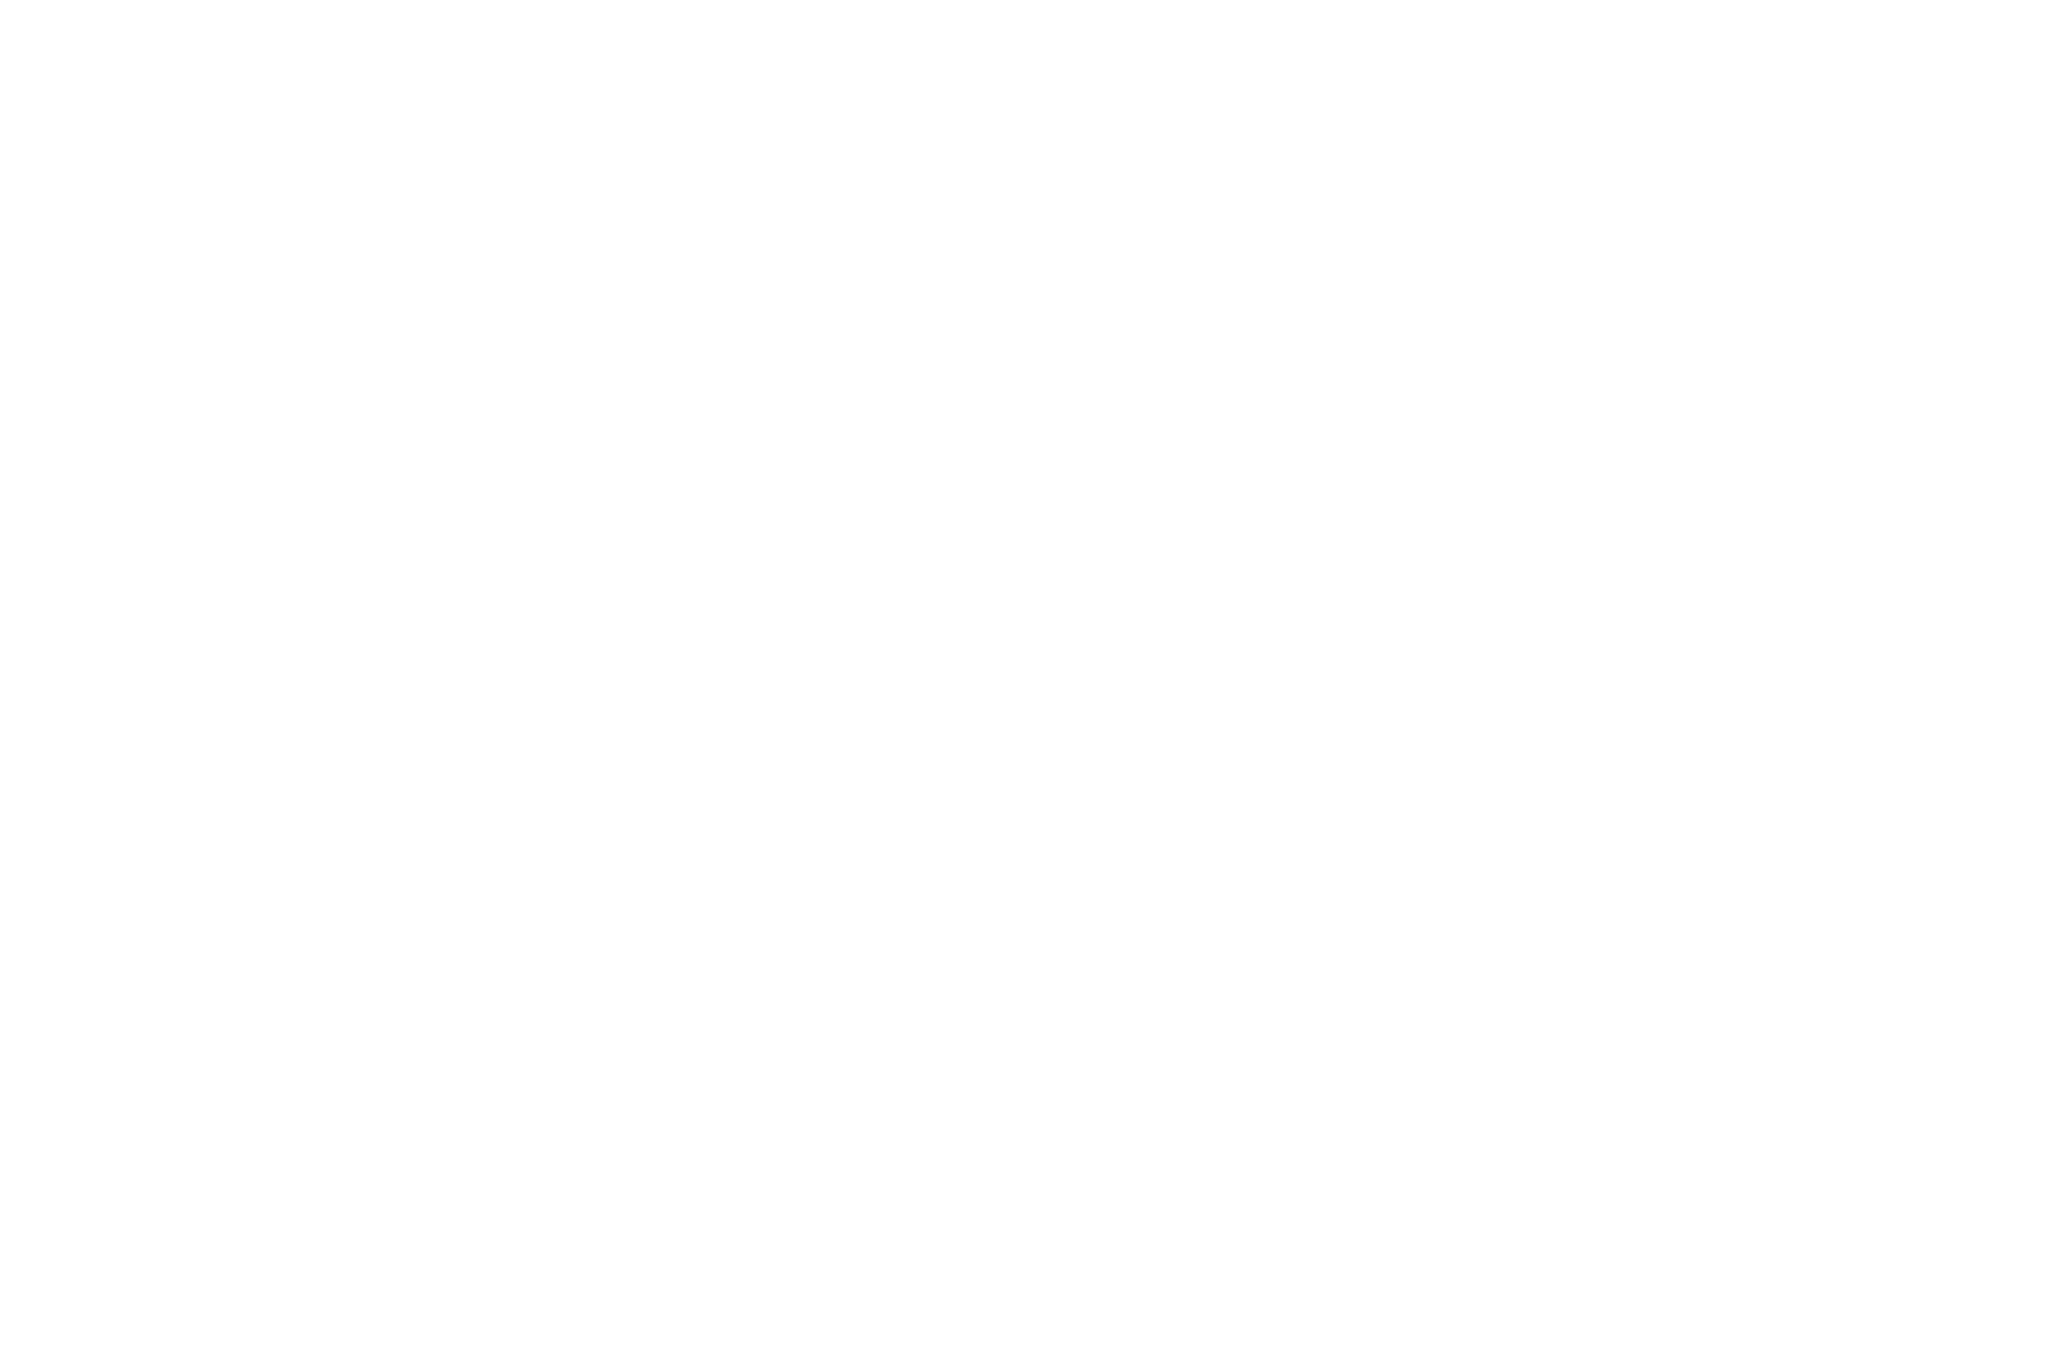 Festival Renuac - Official Selection (White)